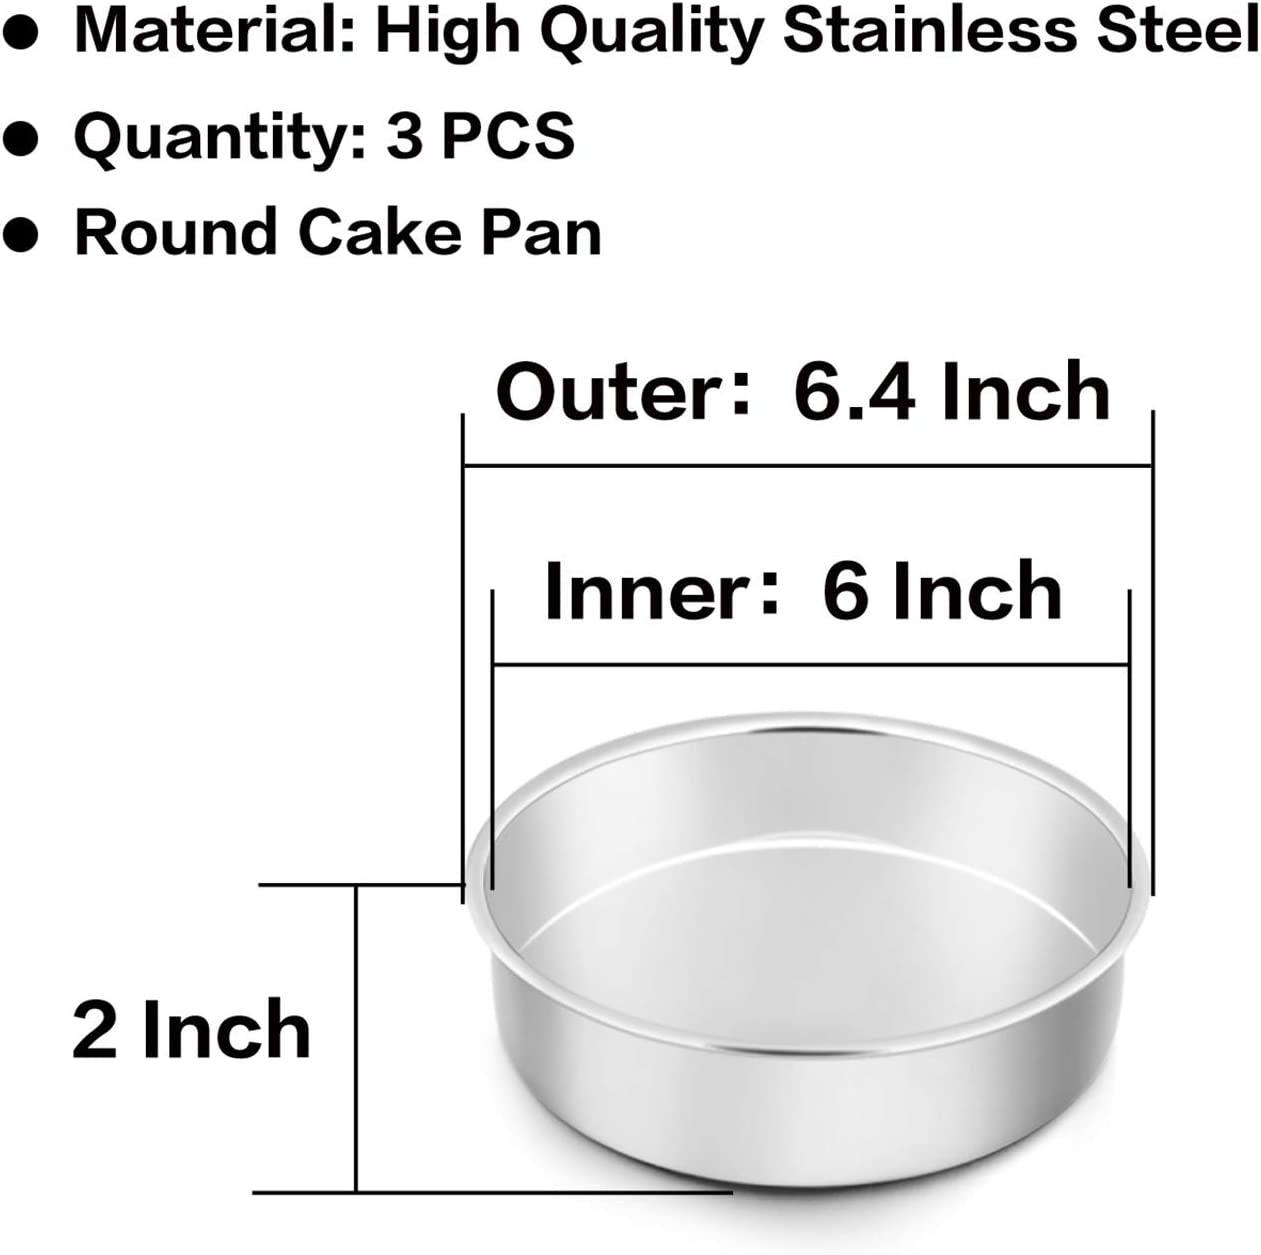 Baking pan conversions chart - The Bake School